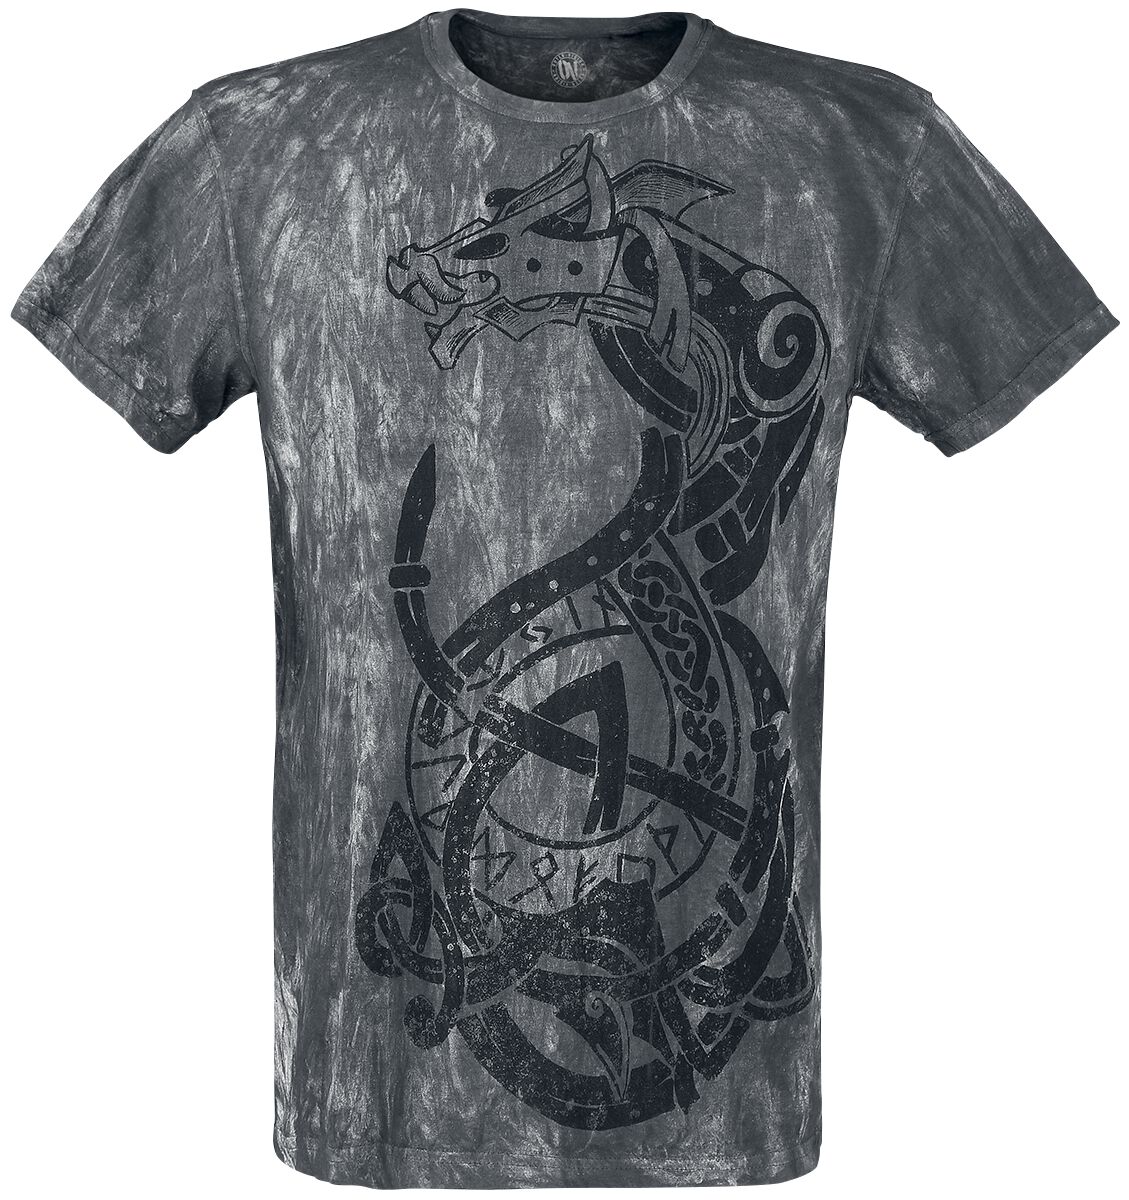 Outer Vision Viking Warrior T-Shirt grau in S